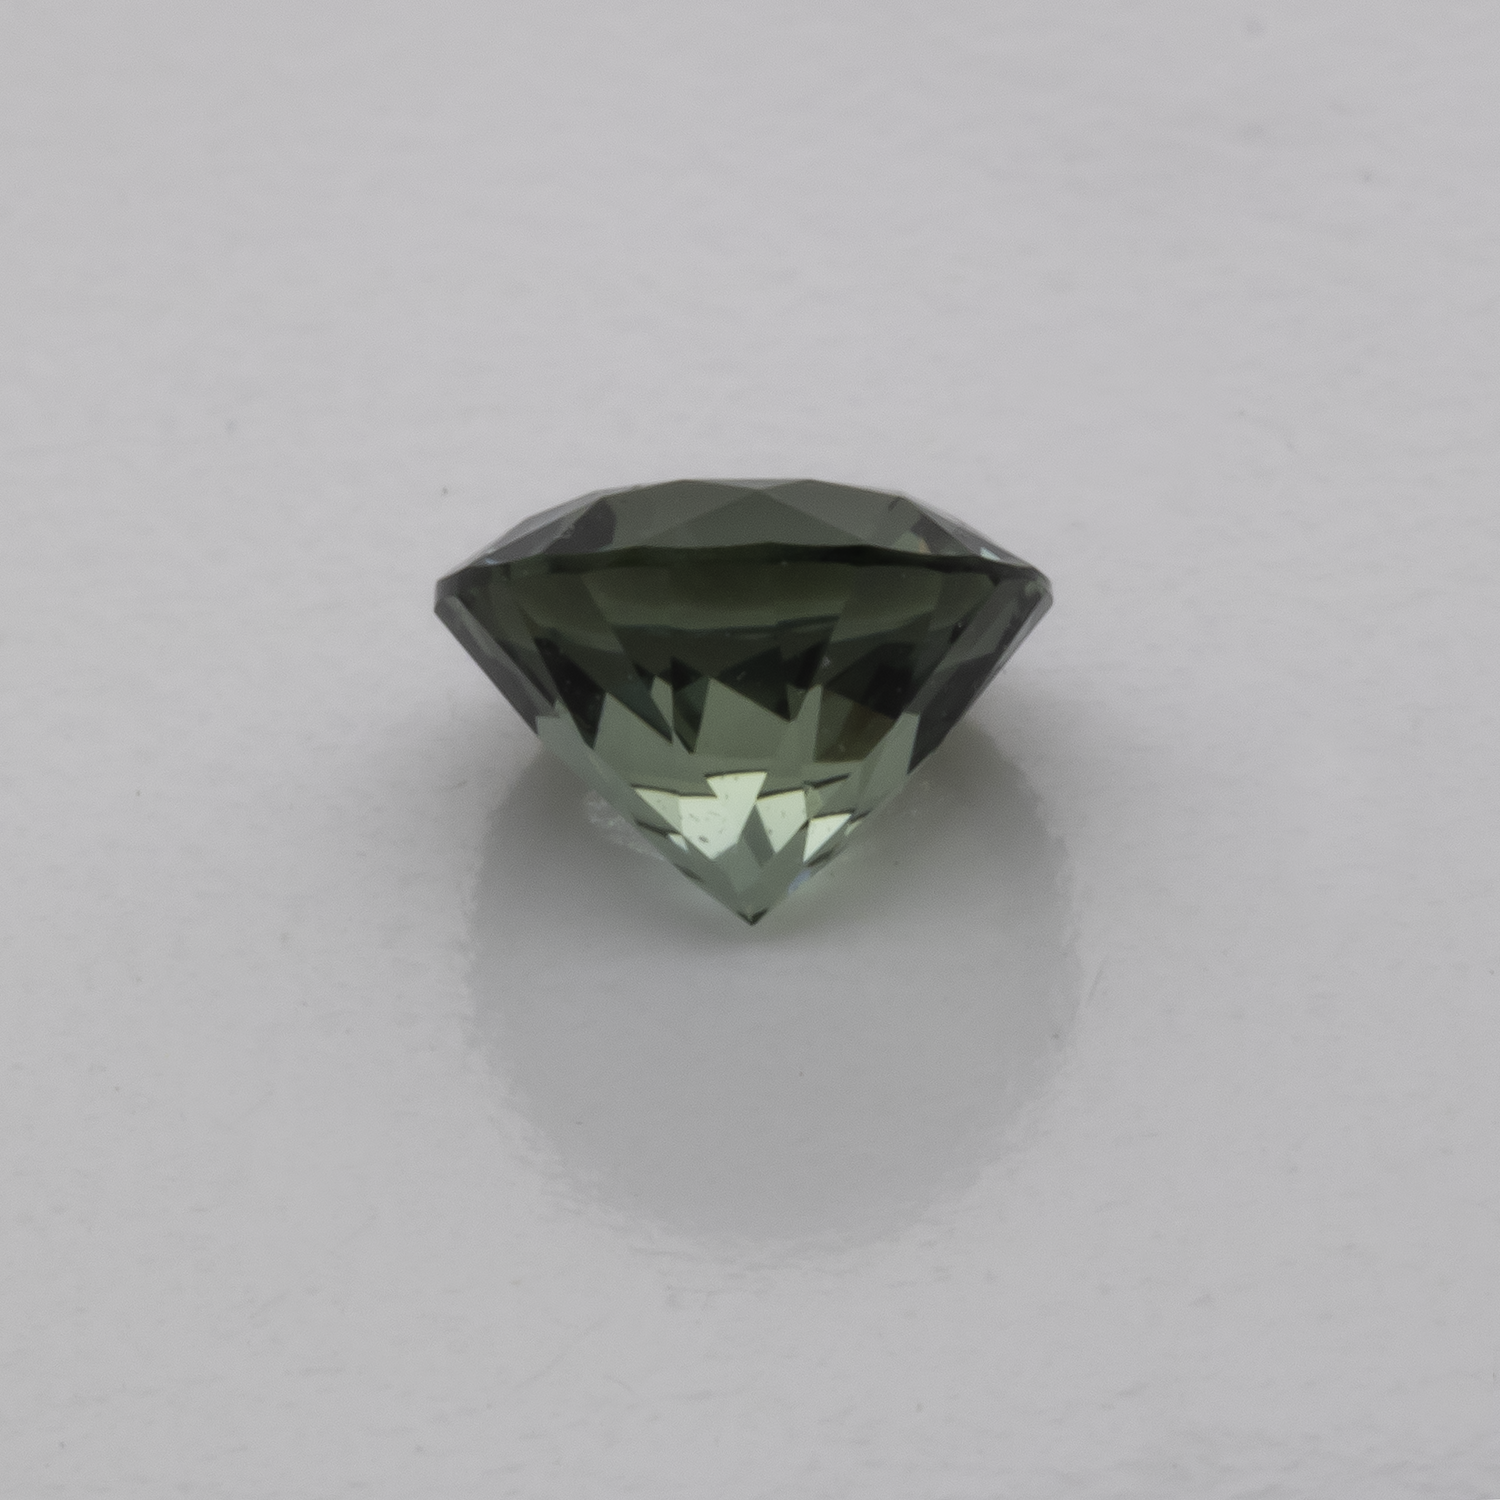 Saphir - blau/grün, rund, 4,8x4,8 mm, 0,53 cts, Nr. XSR11186